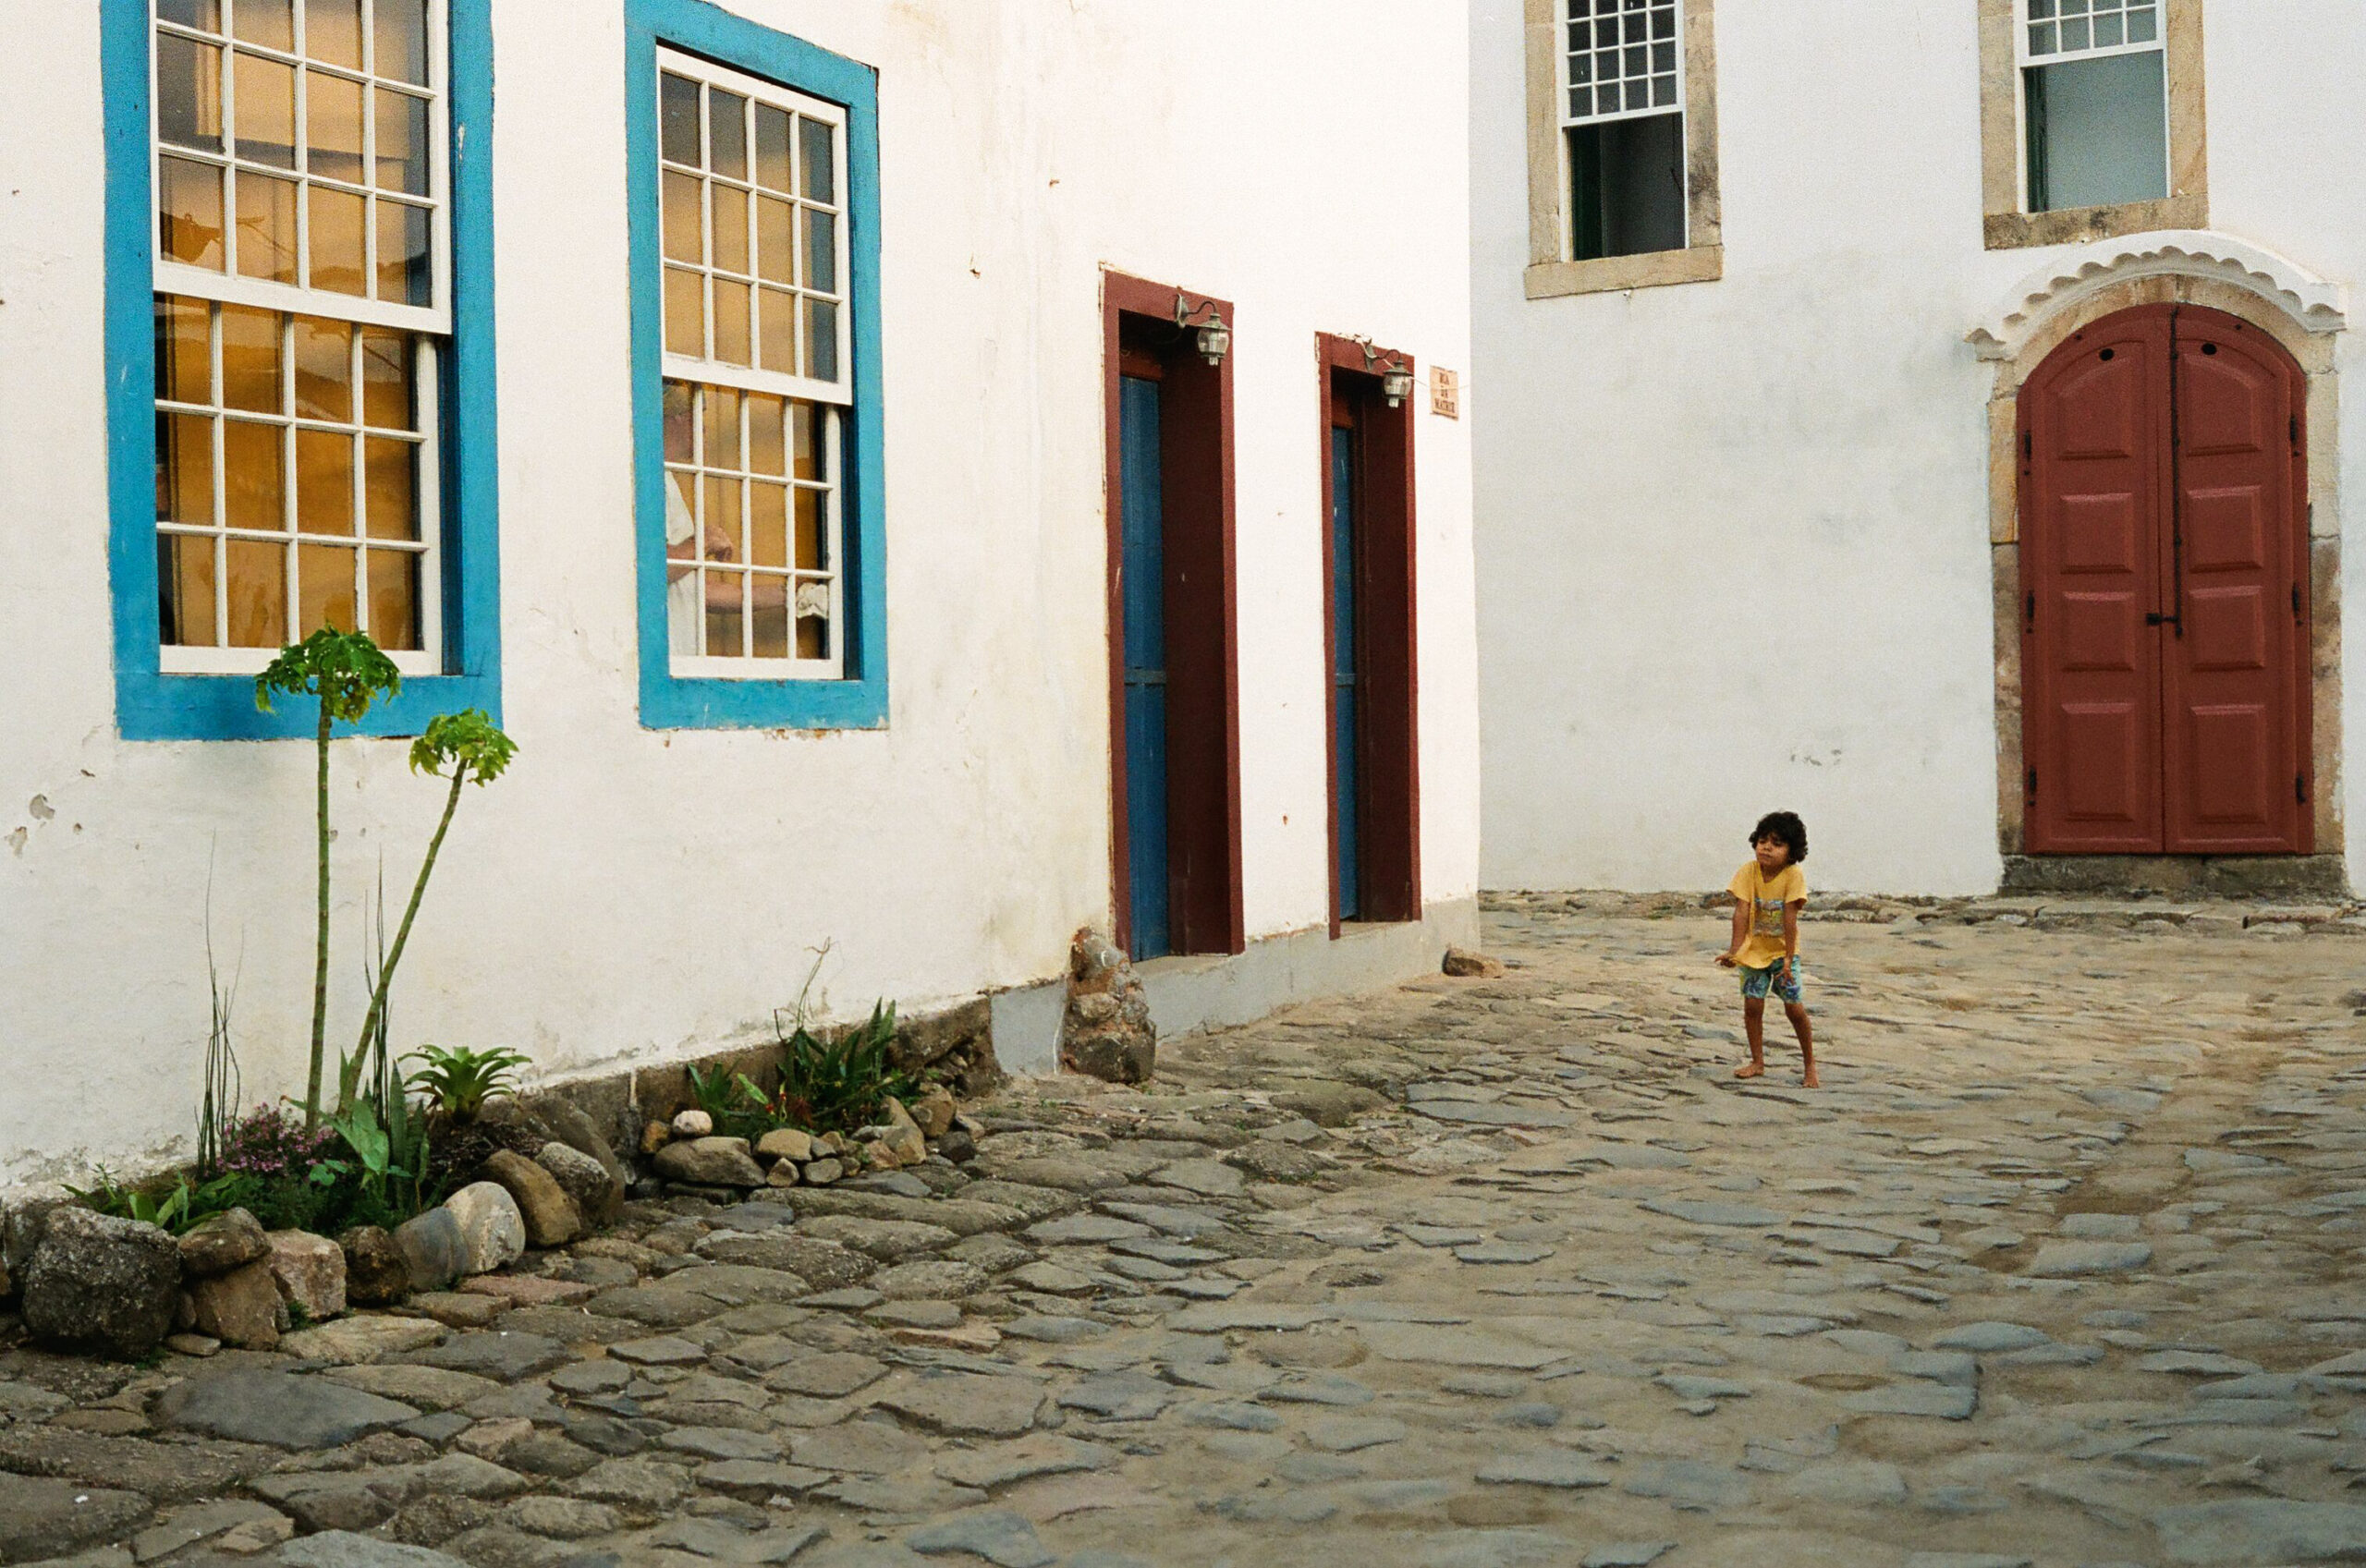 Child standing in cobblestone street